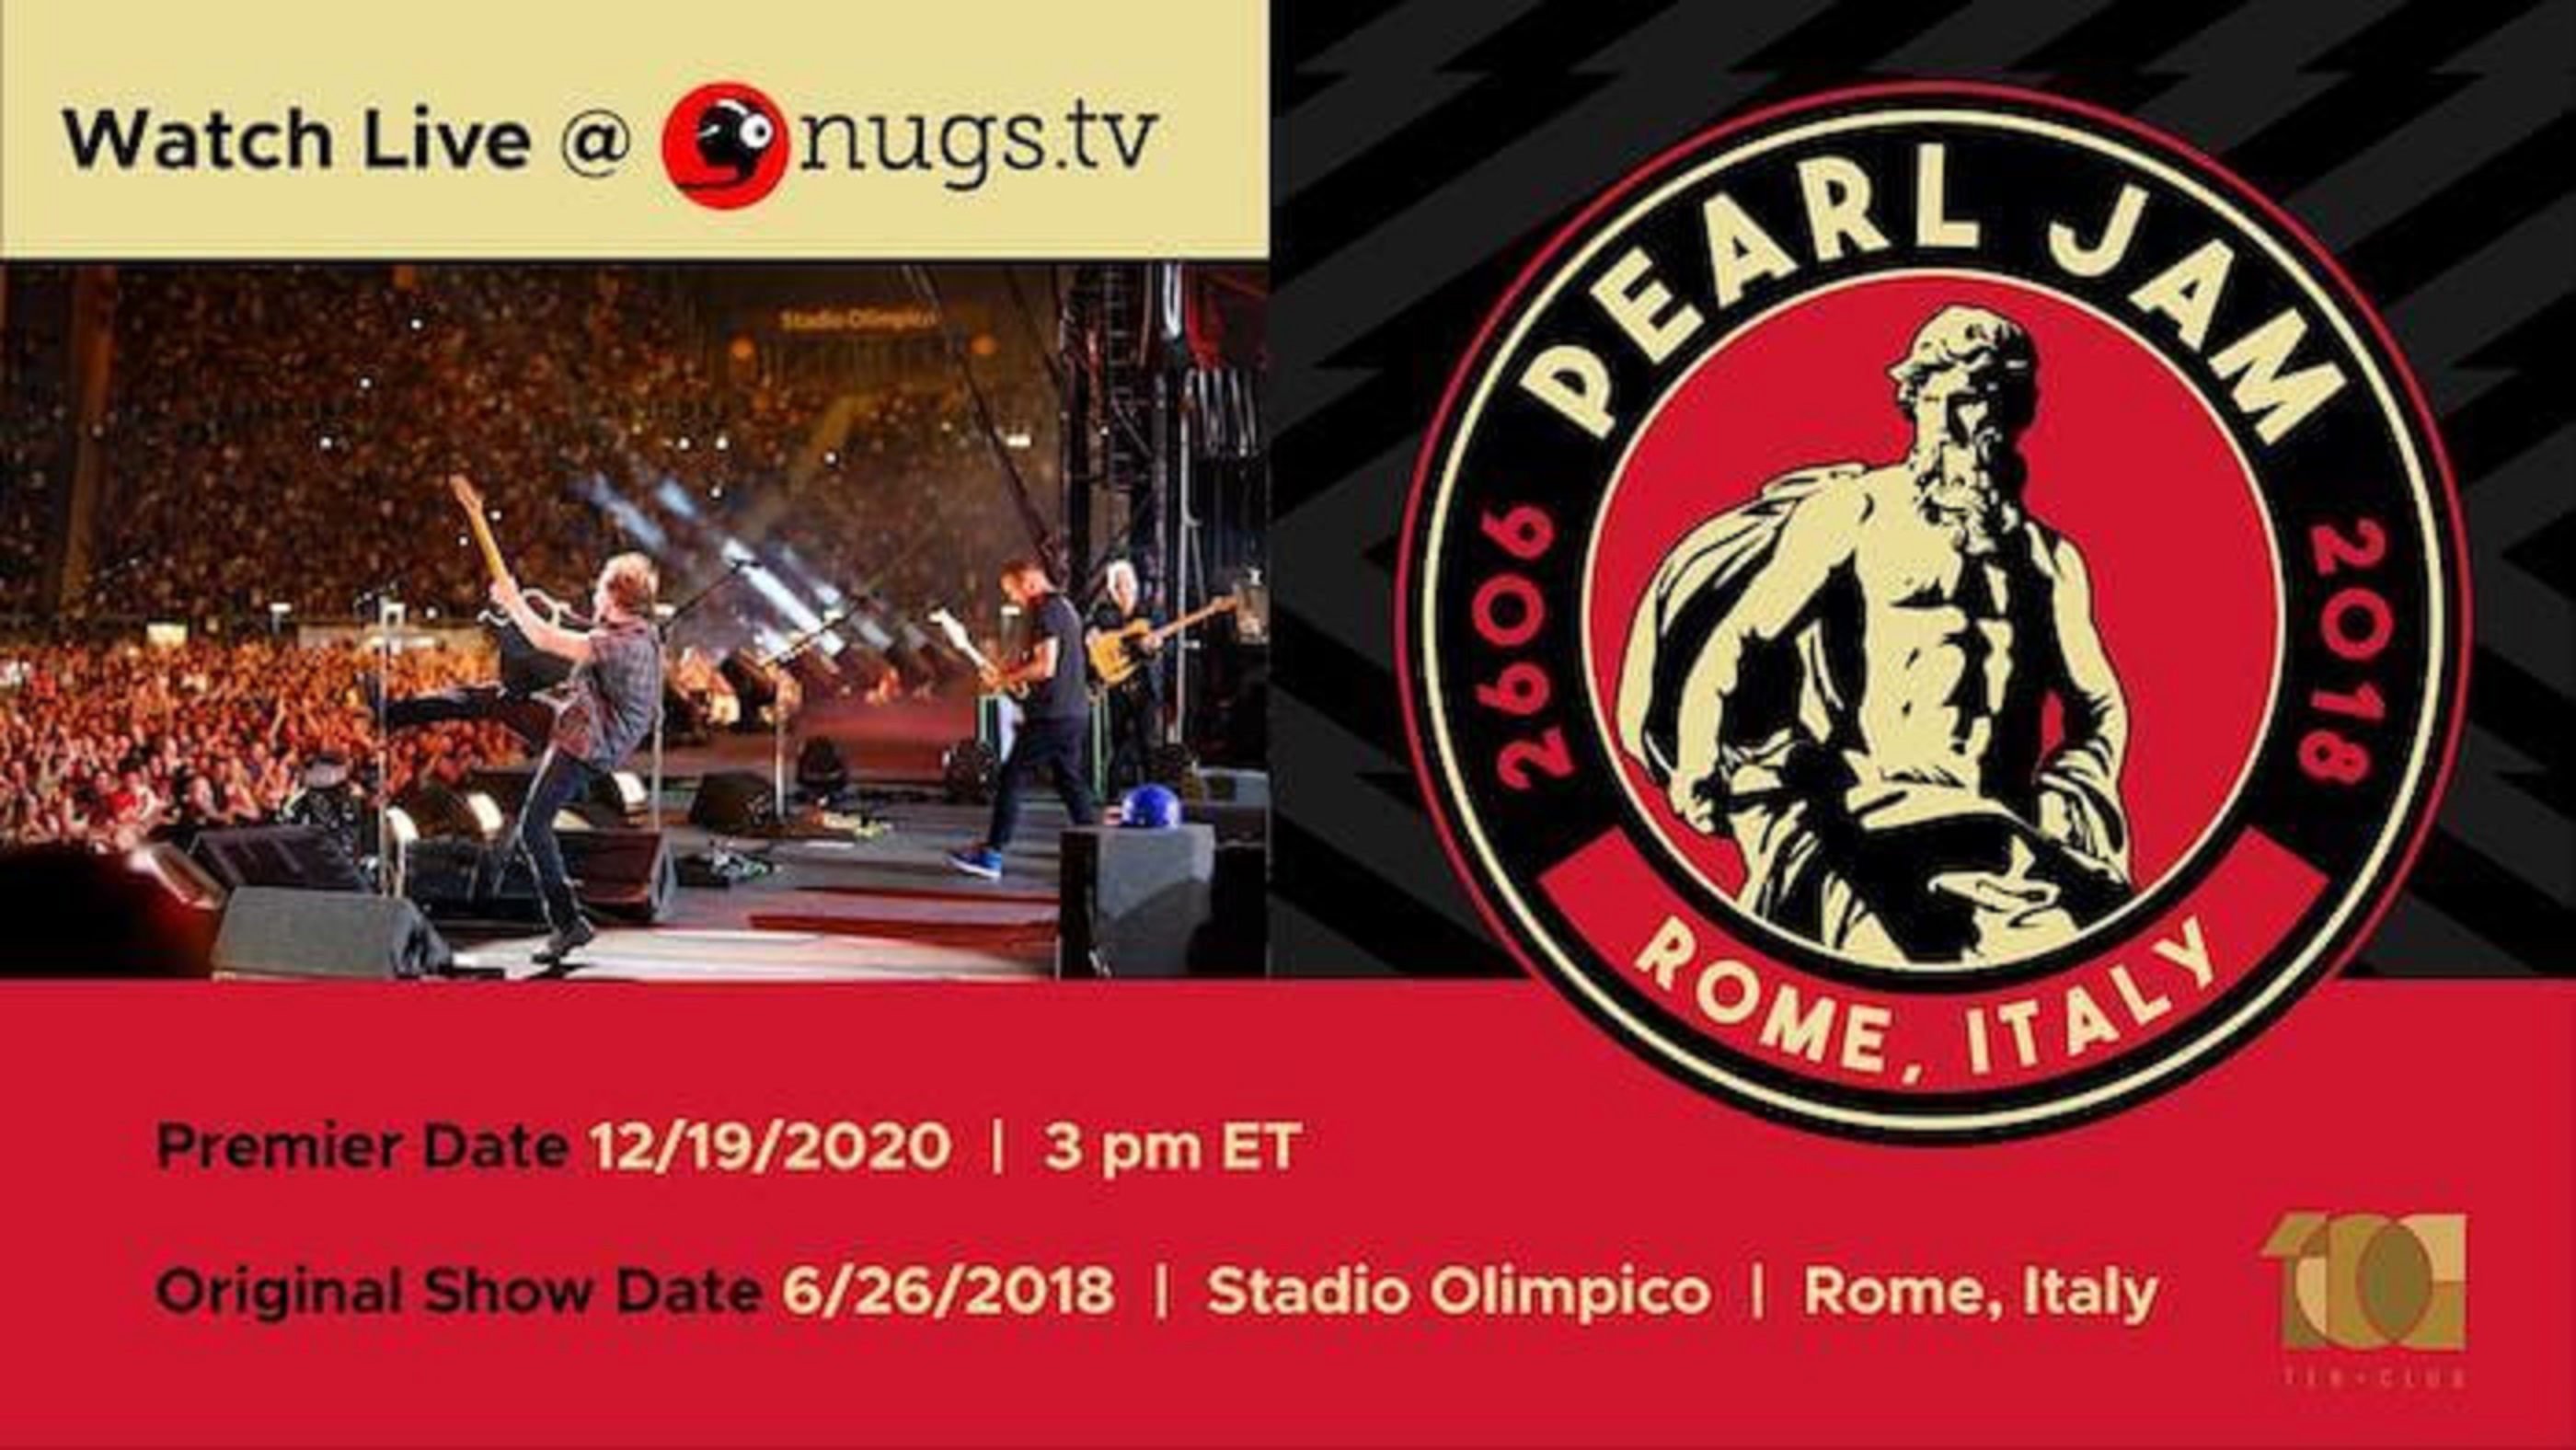 Tune in to the Pearl Jam Rome Stream